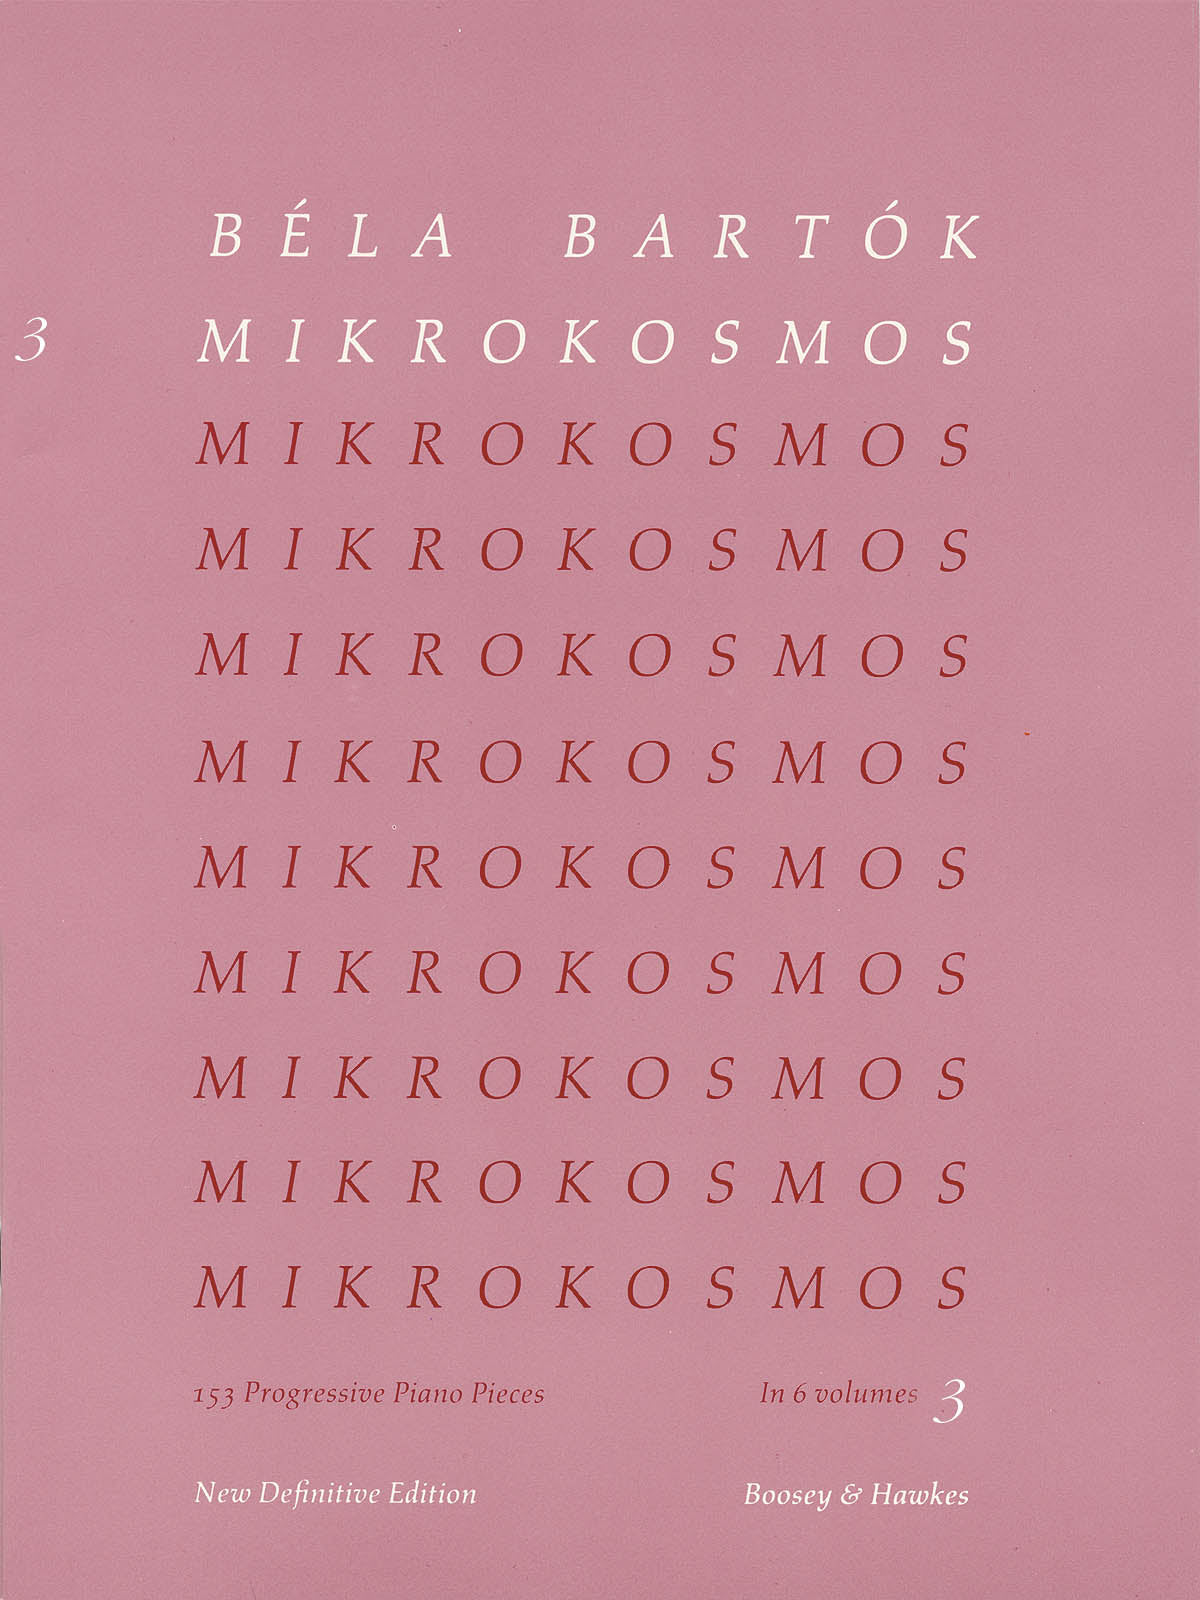 Bartók: Mikrokosmos - Volume 3